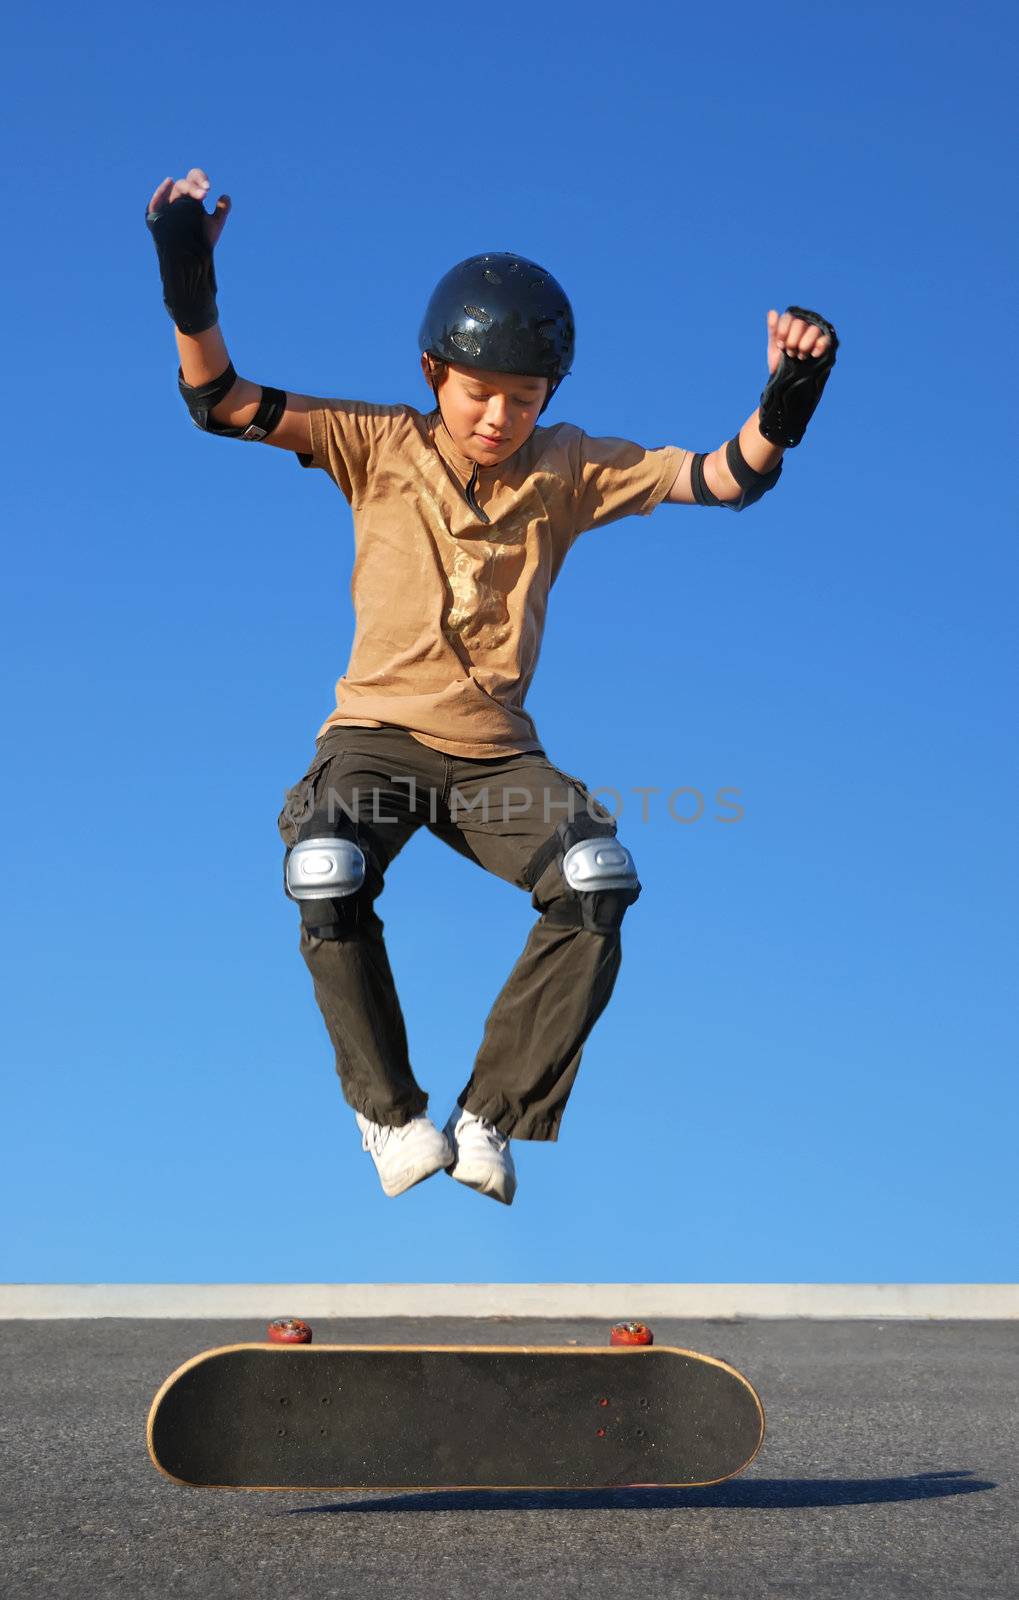 Boy Jumping High from Skateboard by goldenangel